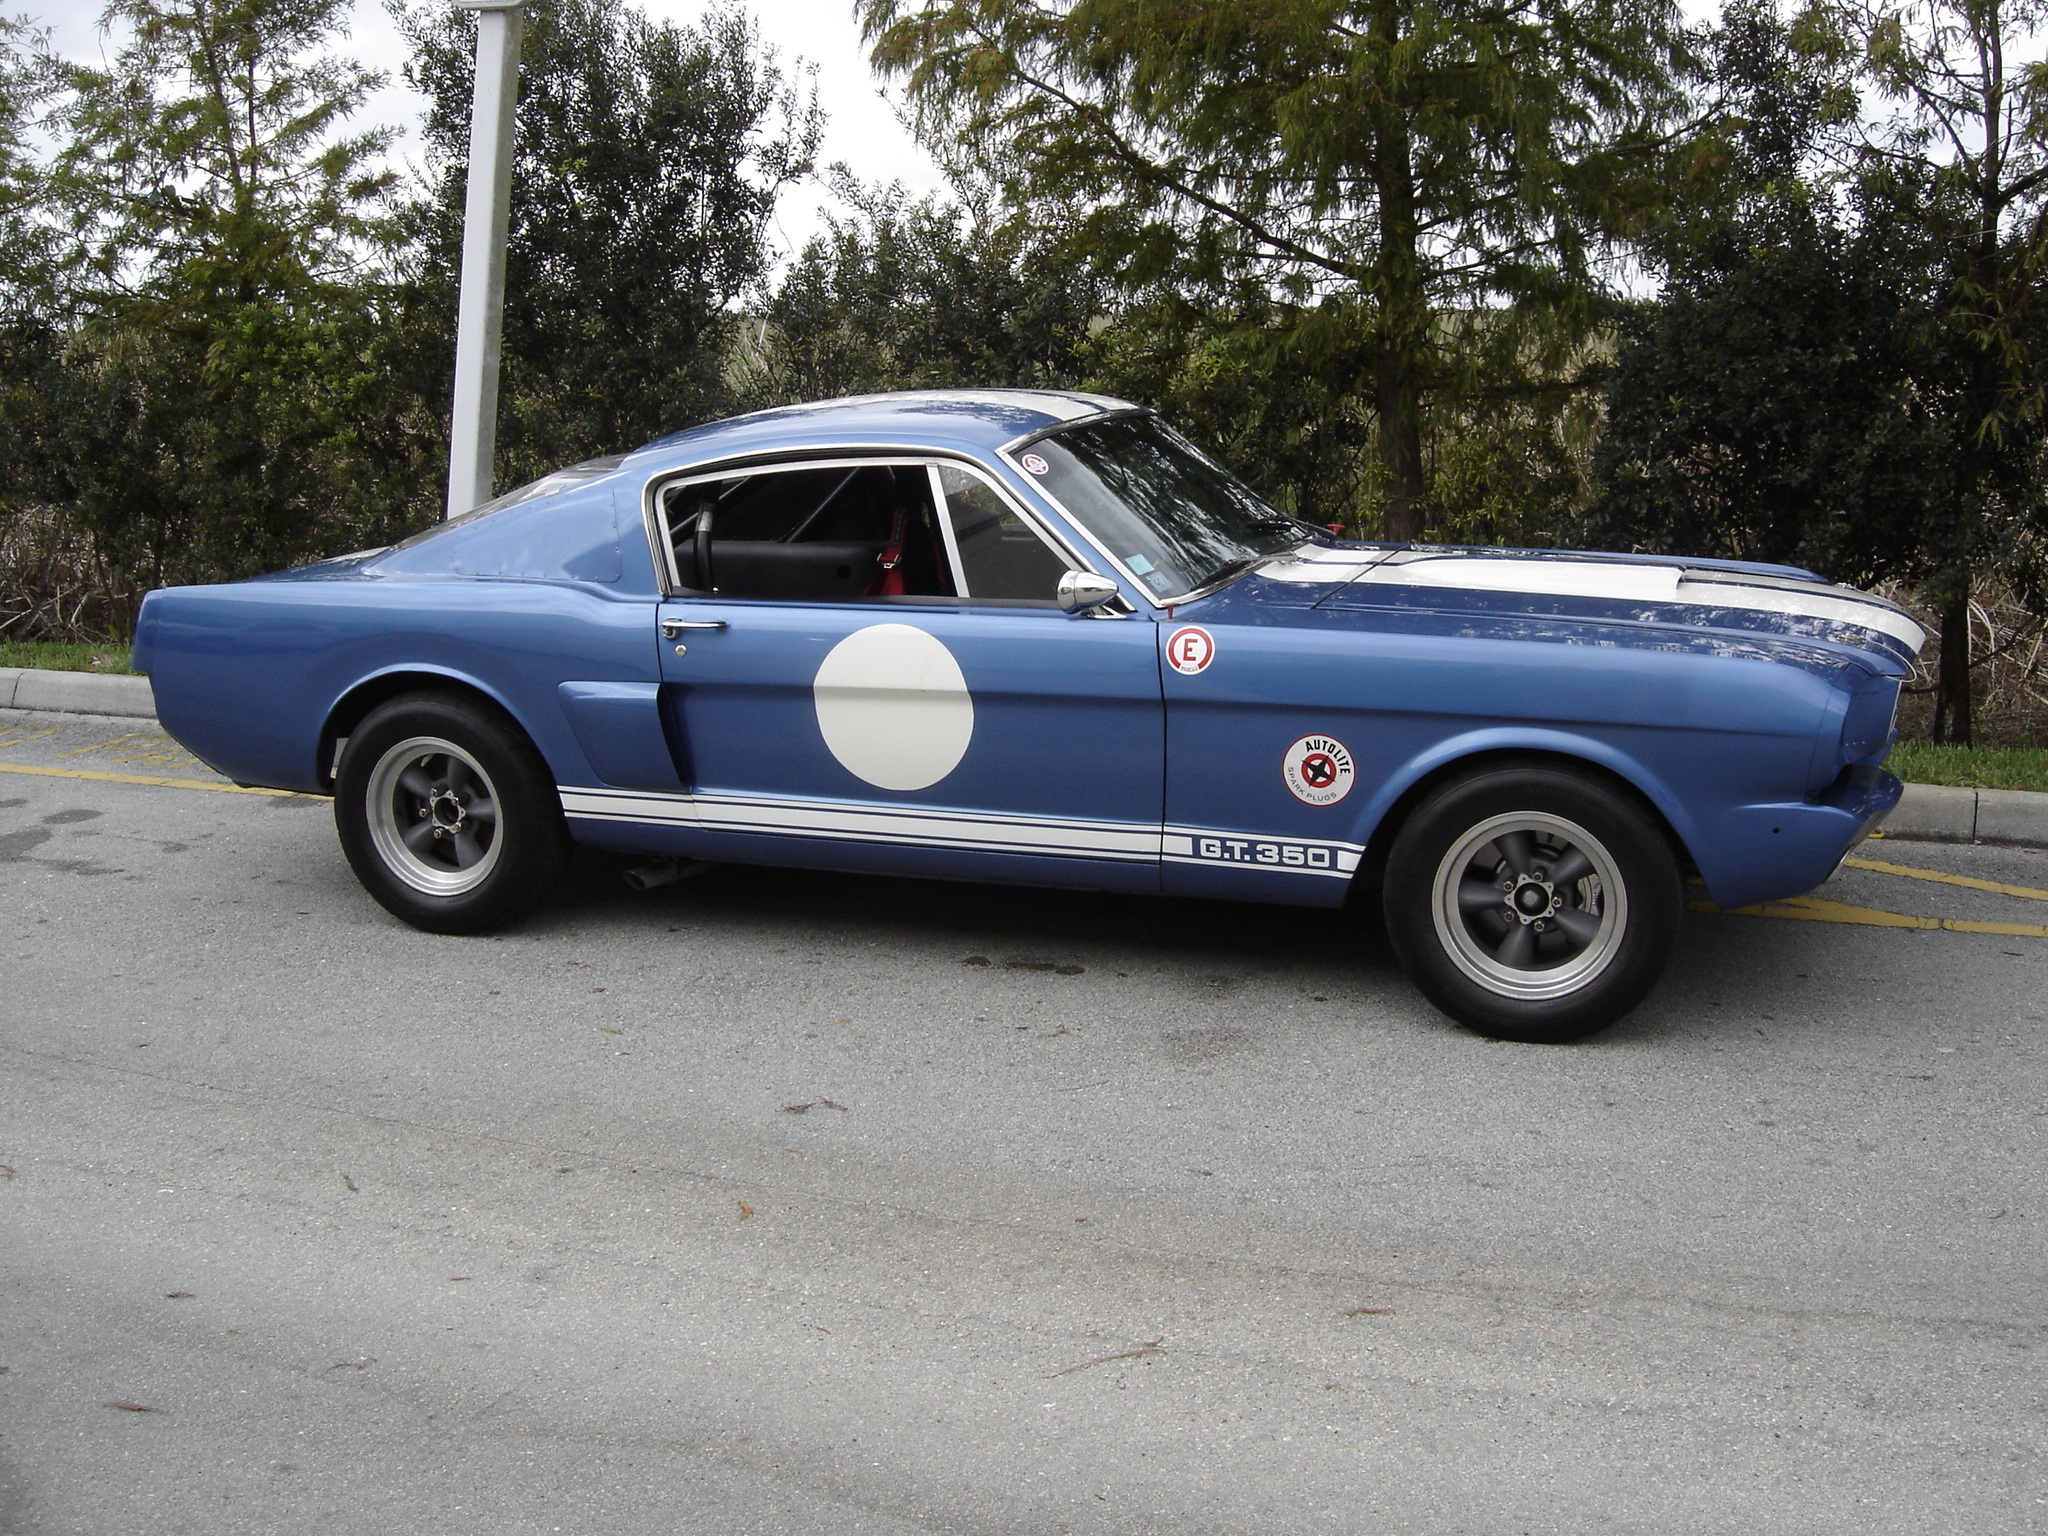  Desktop Wallpaper on Cars Road 1967 Race Ford Mustang Shelby Gt350 Fastback 1965 1966 Gt